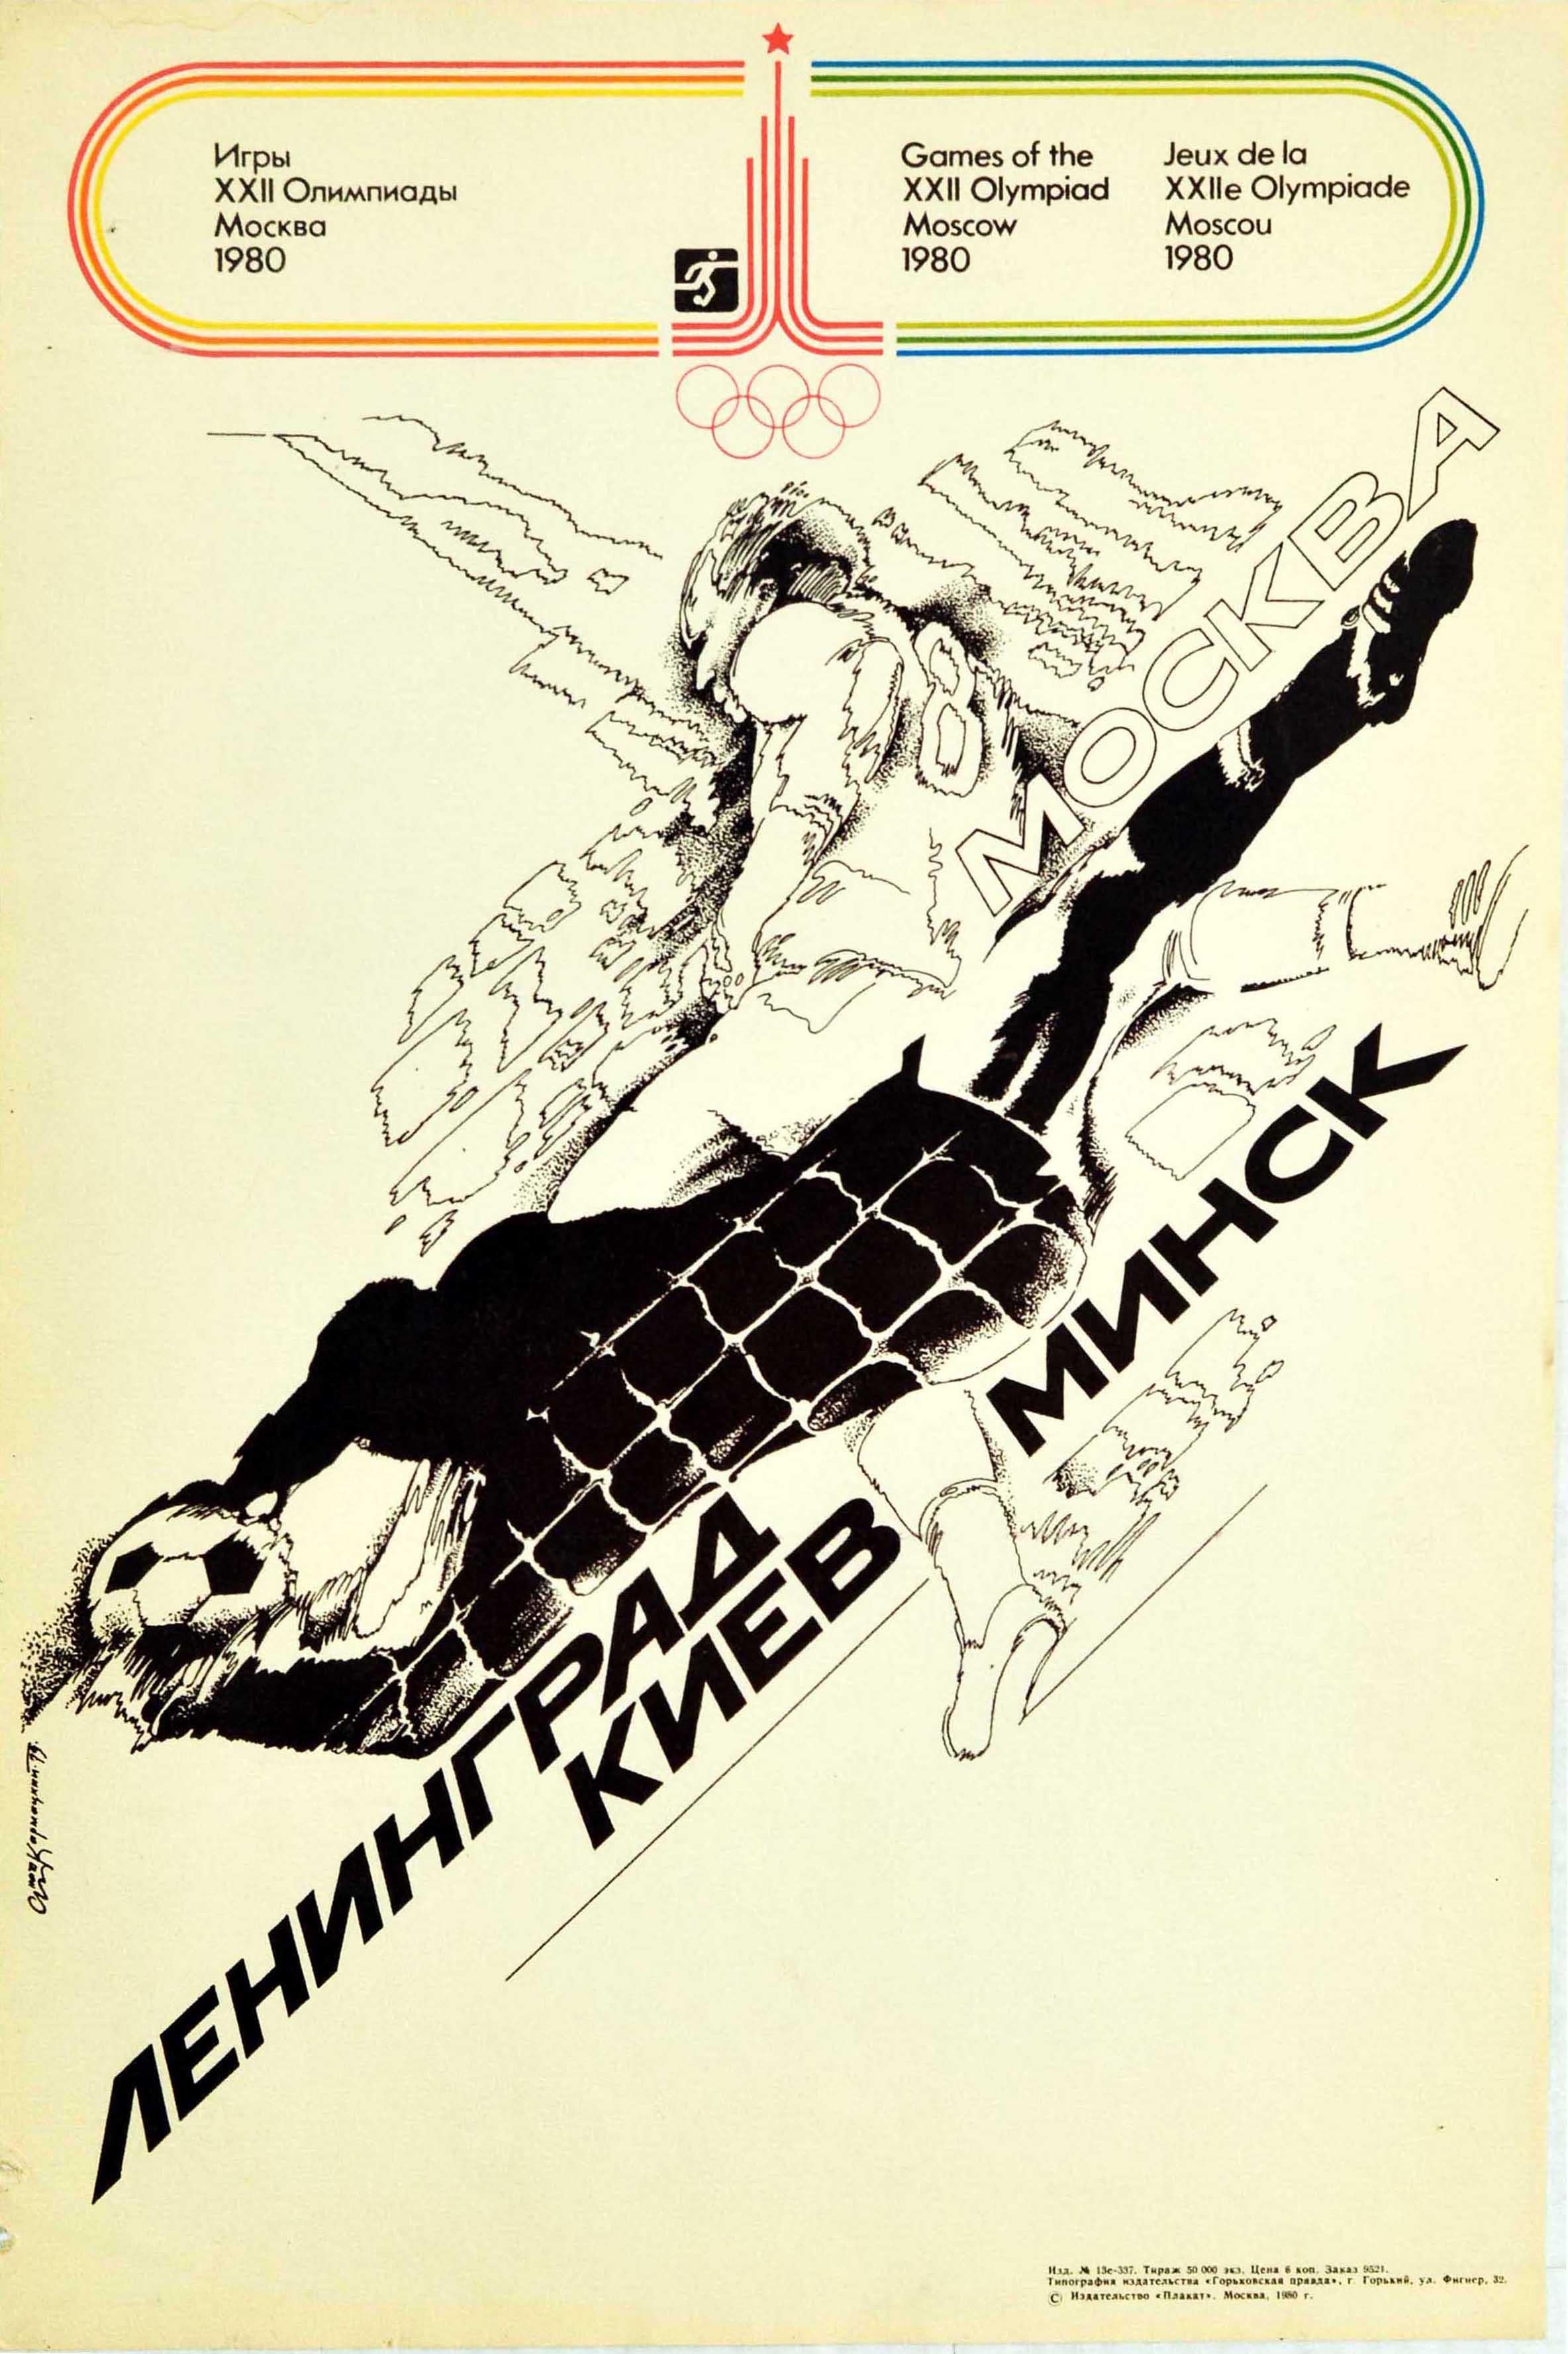 Karmatskiy Print - Original Vintage Sport Poster Moscow Olympics 1980 Football Leningrad Kiev Minsk